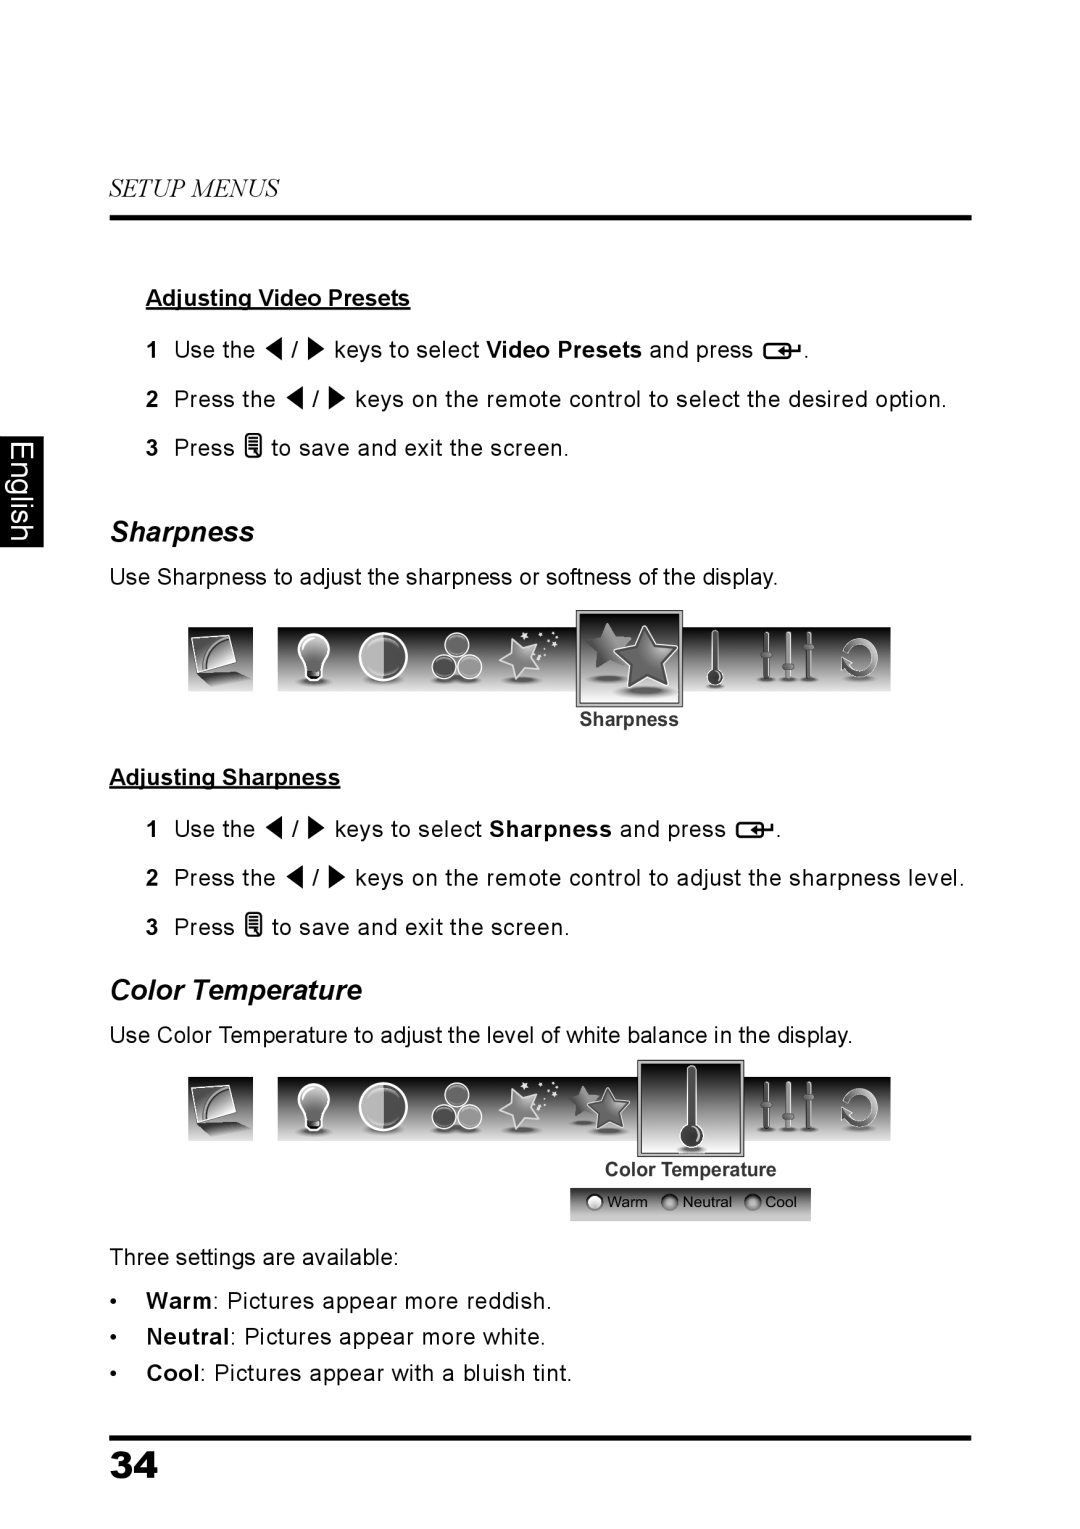 Westinghouse LD-3237 user manual Color Temperature, English, Setup Menus, Adjusting Video Presets, Adjusting Sharpness 